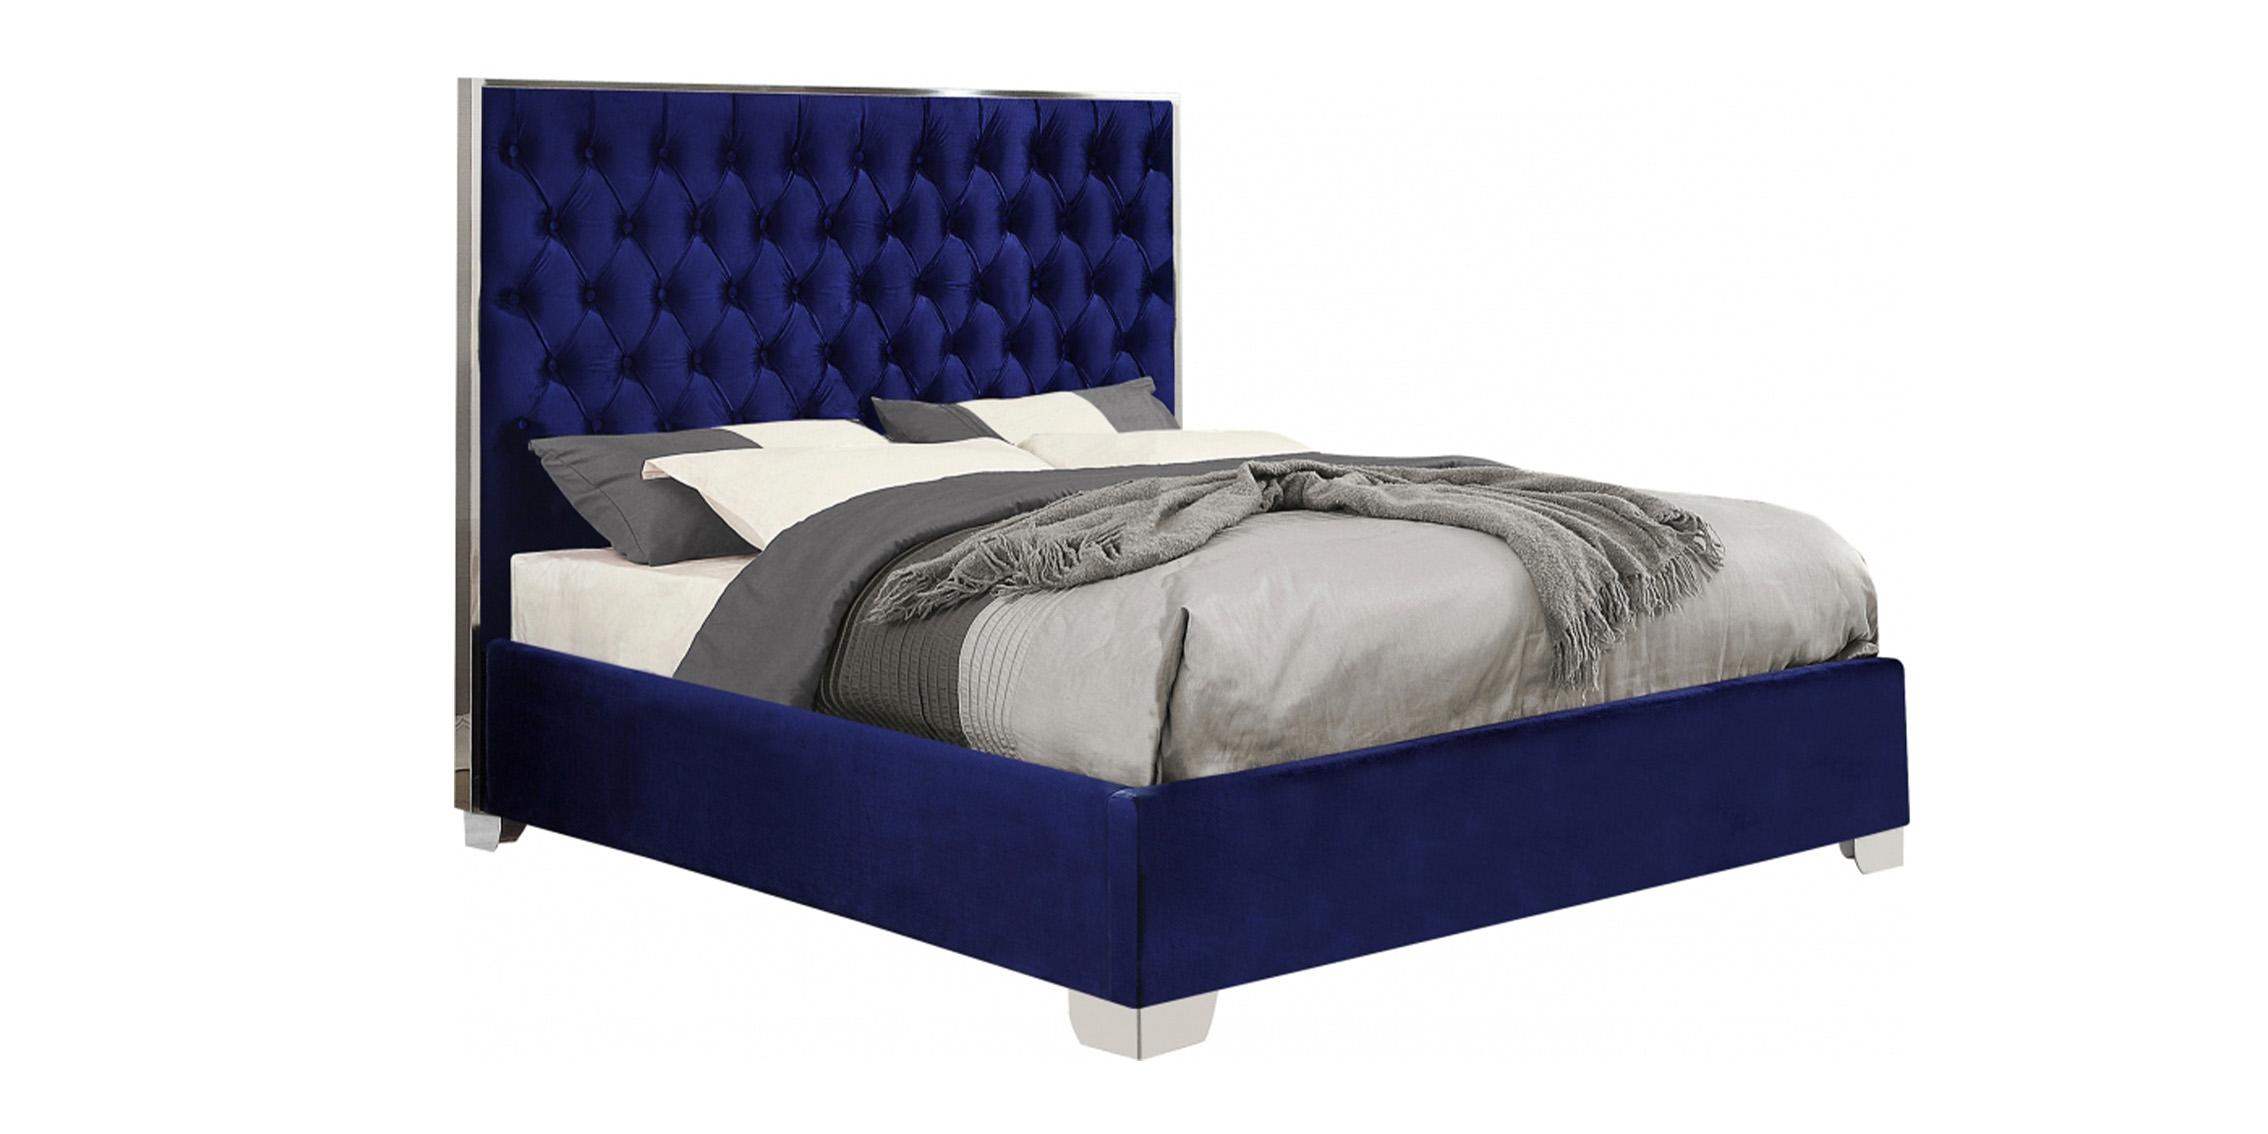 

    
Meridian Furniture LexiNavy-K Platform Bed Navy blue LexiNavy-K
